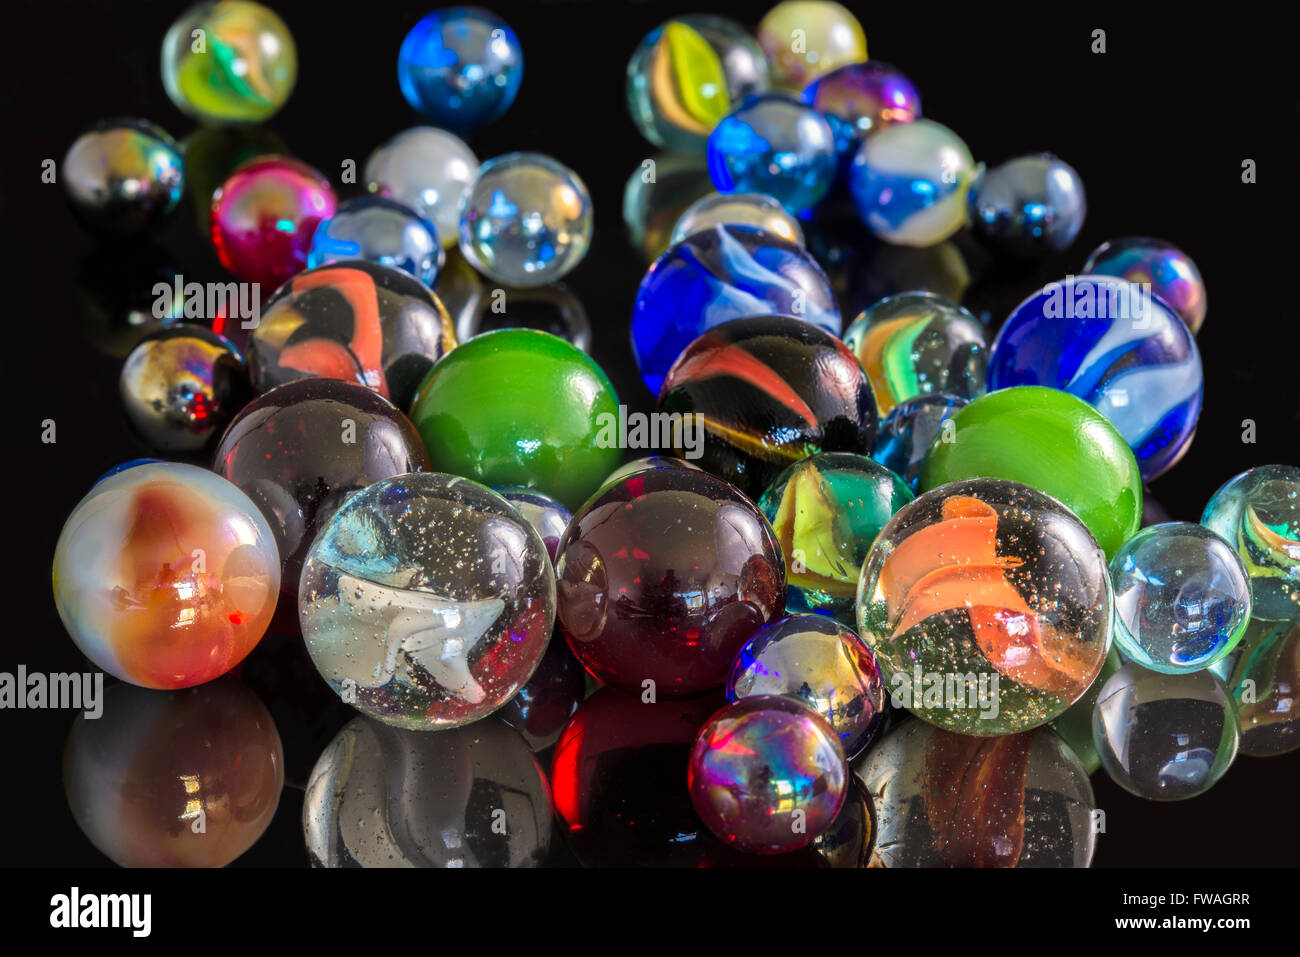 Canicas de cristal fotografías e imágenes de alta resolución - Alamy